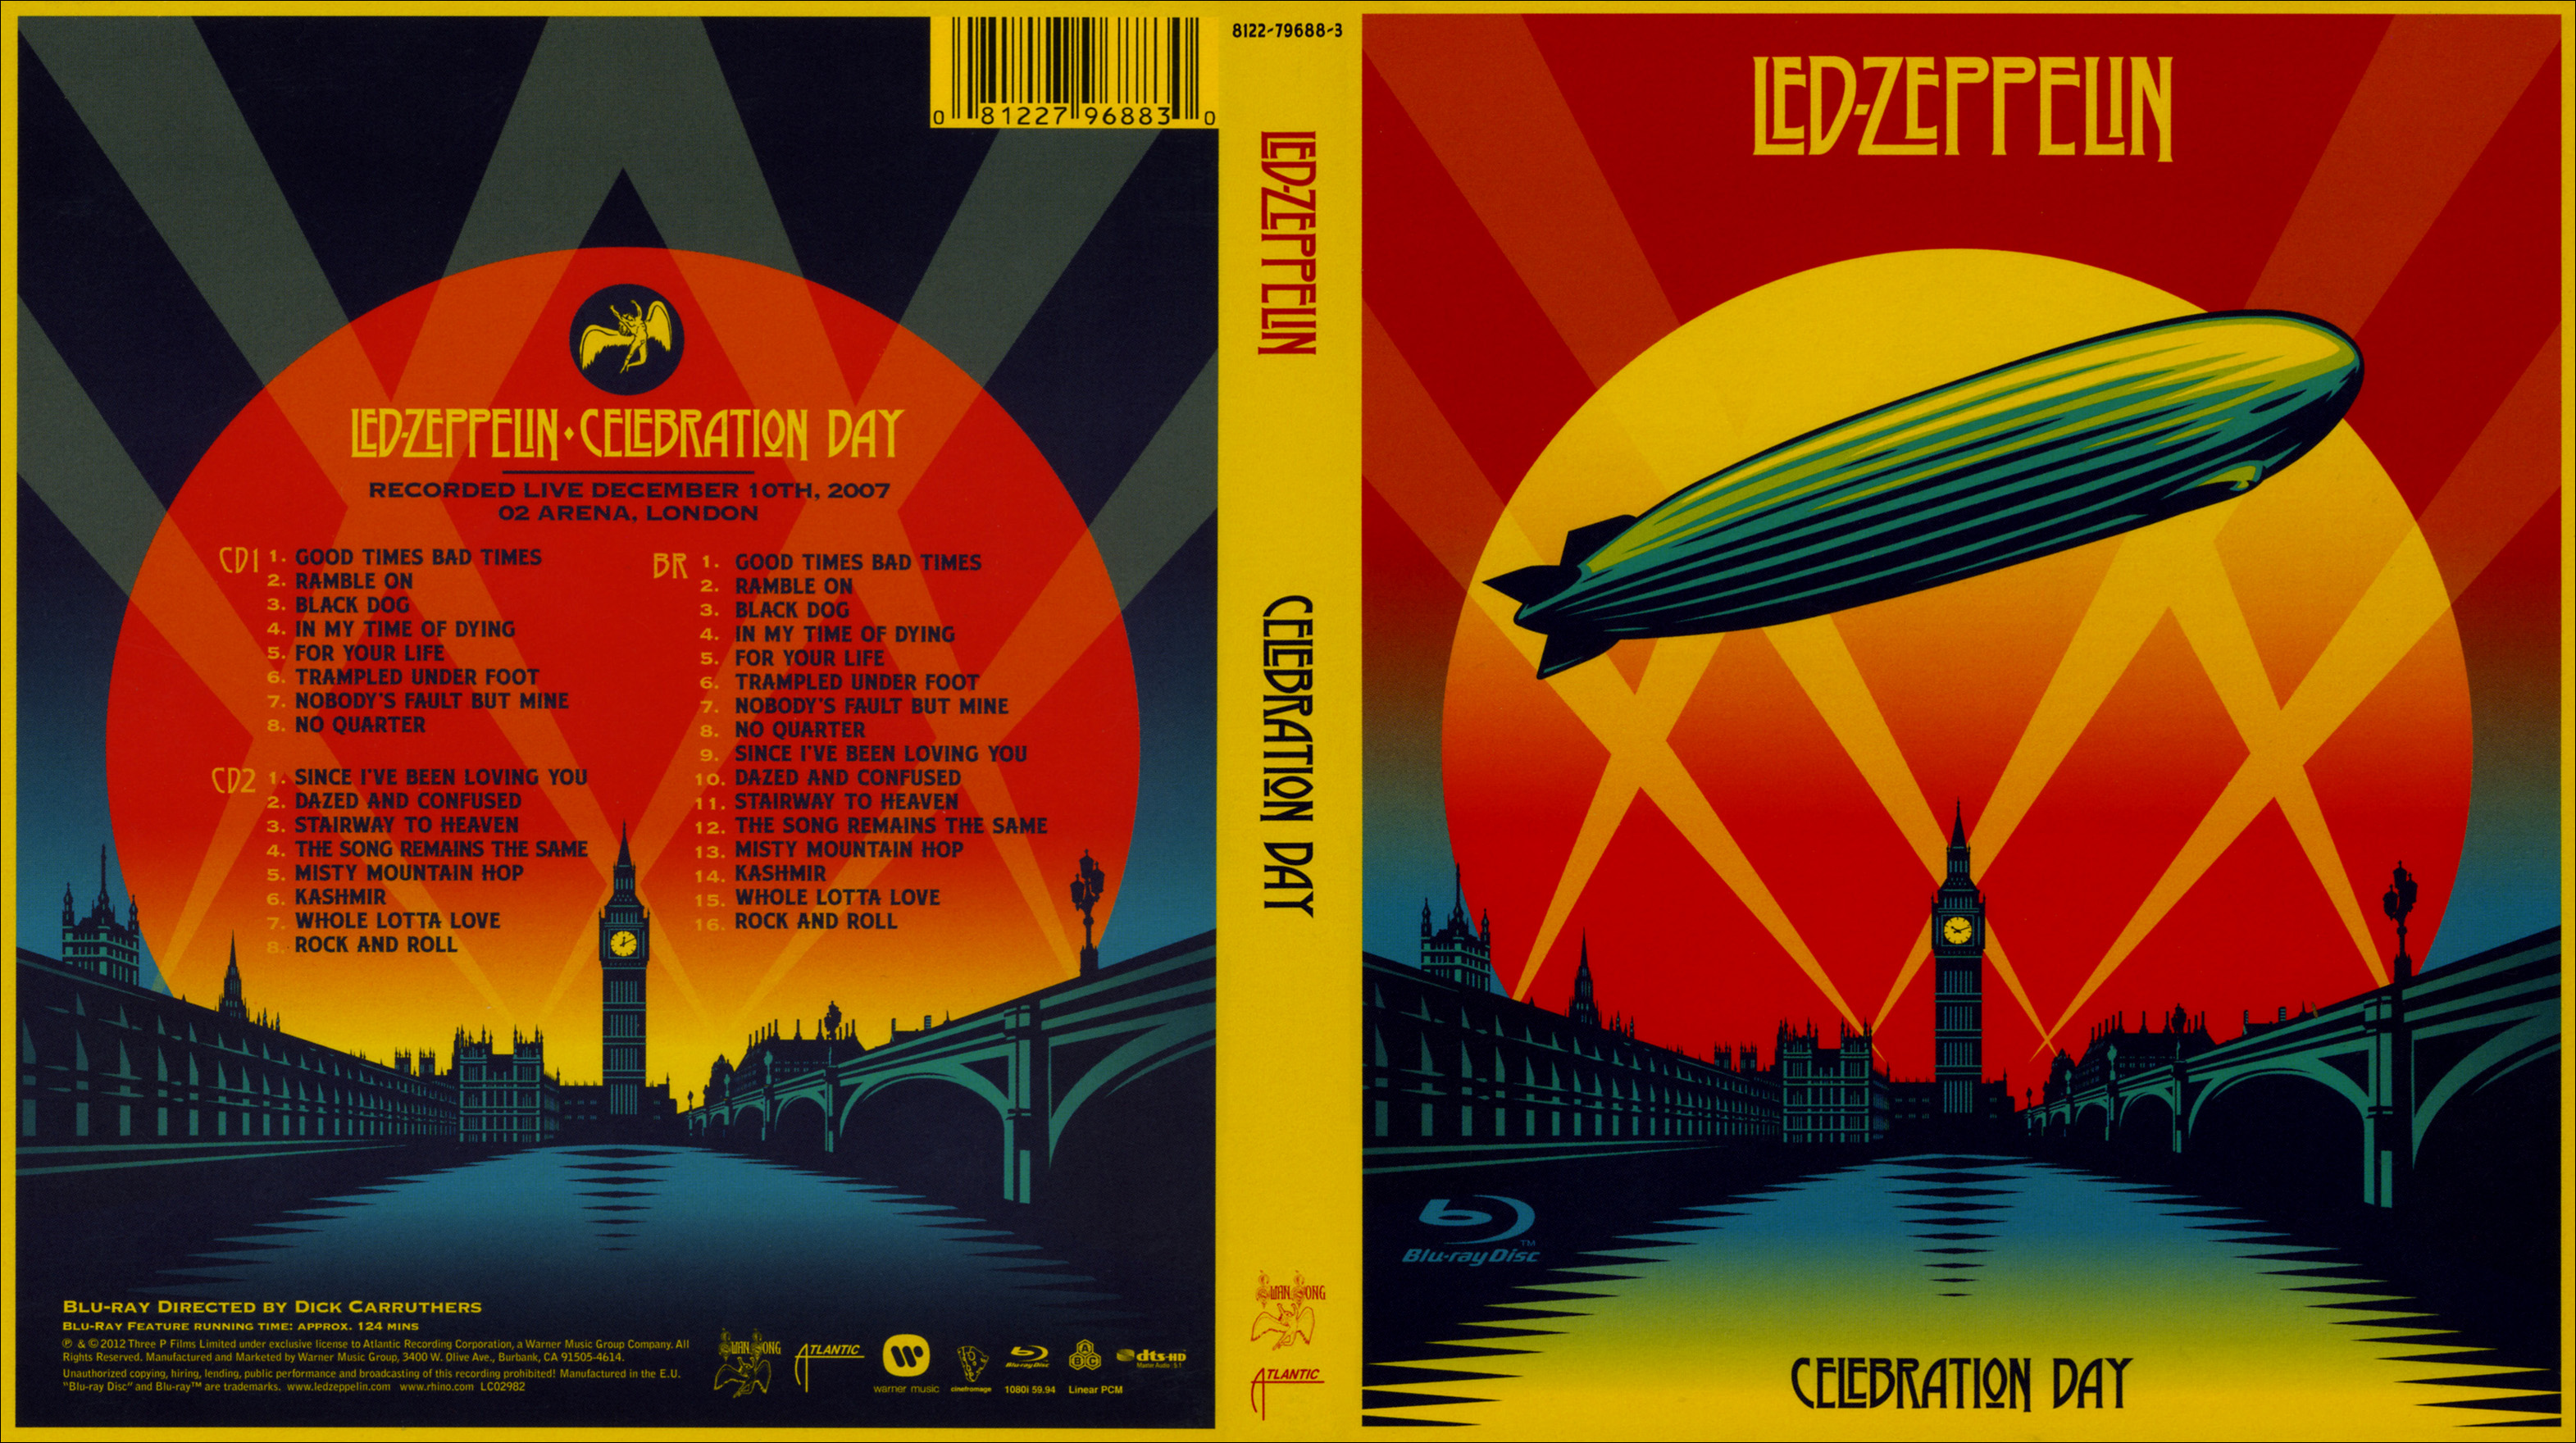 Jaquette DVD Led Zeppelin - Celebration day (BLU-RAY)